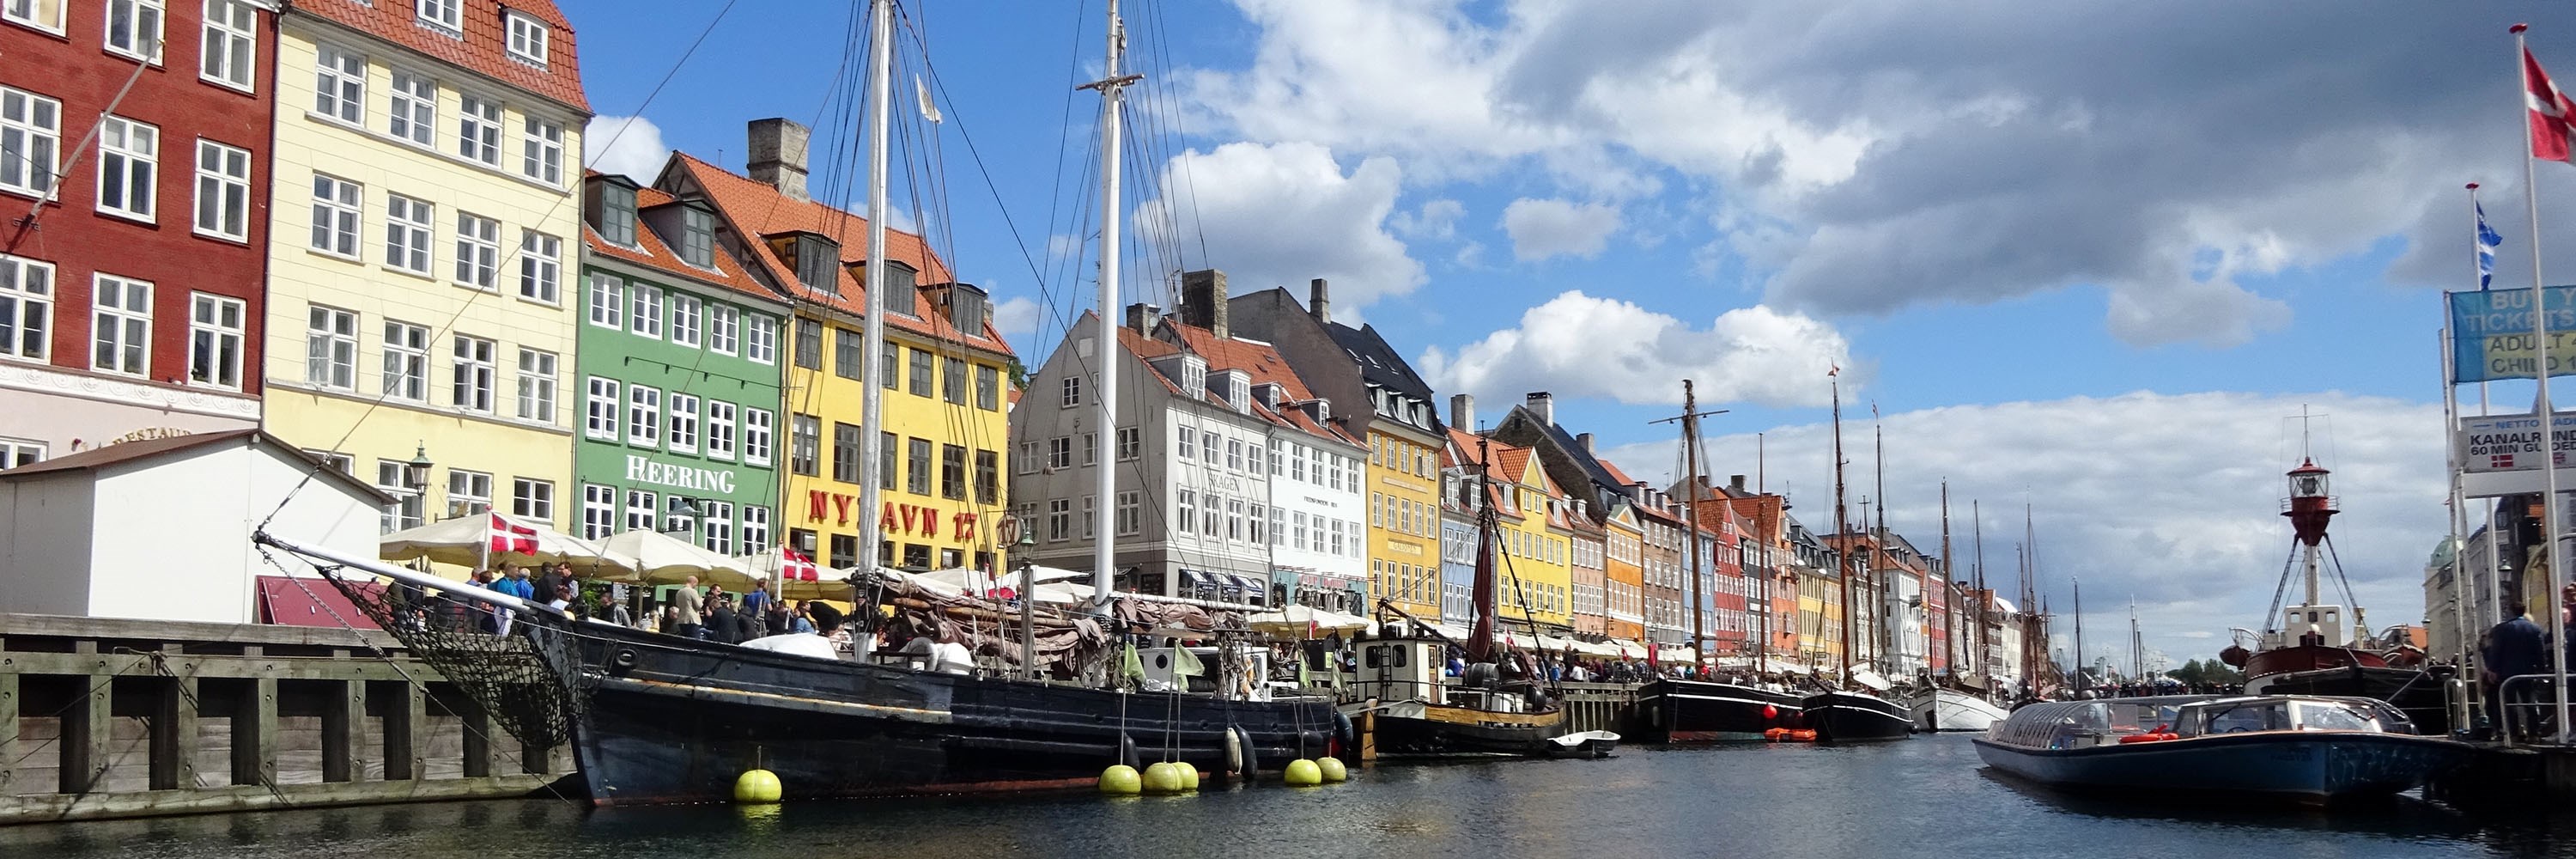 Nyhavn, Copenhagen, Denmark. Photo: Paasikivi/Creative Commons Attribution-Share Alike 4.0 International